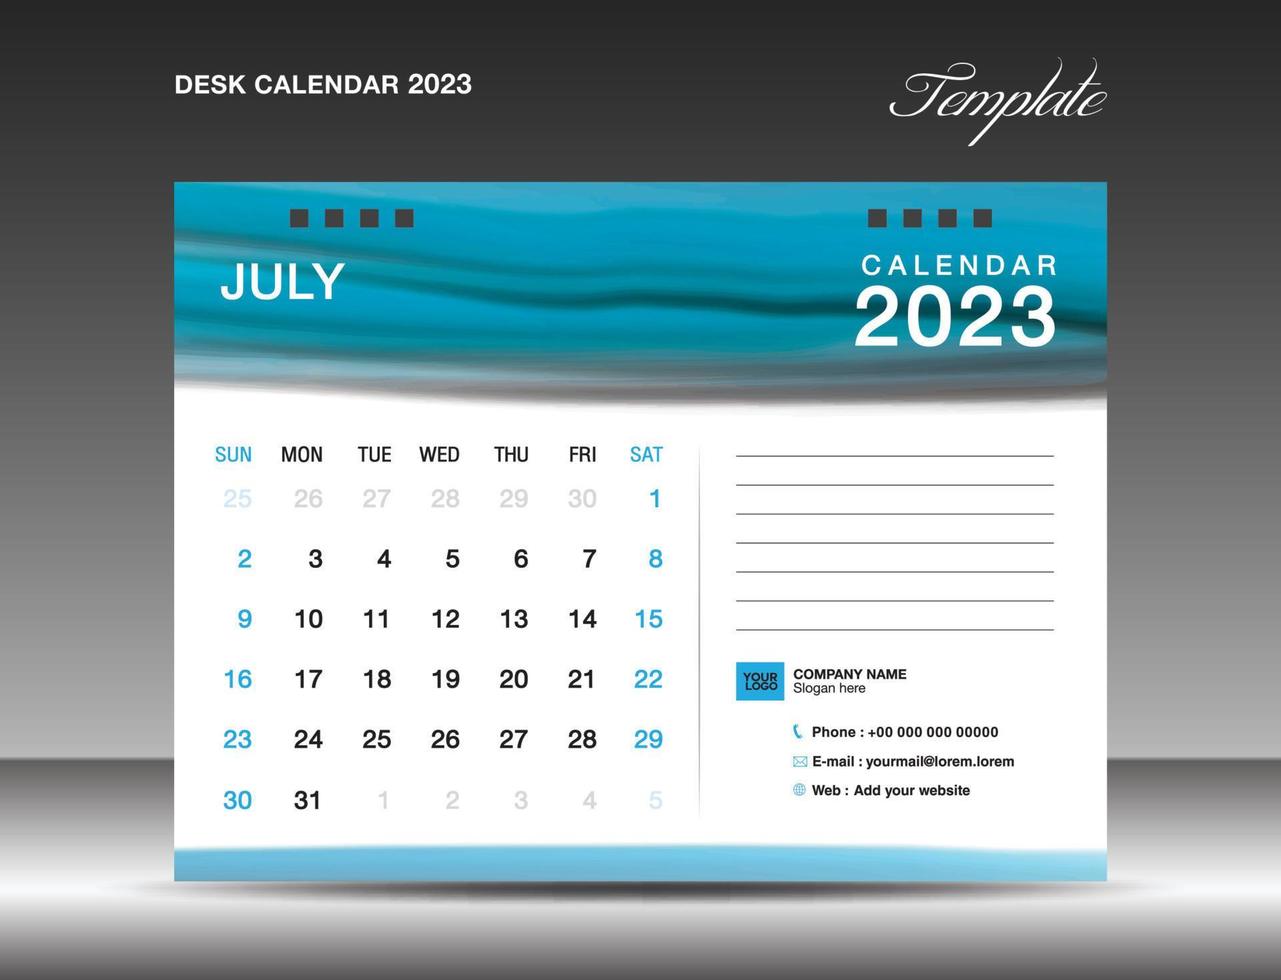 Desk calender 2023 - July 2023 template, Calendar 2023 design template, planner, simple, Wall calendar design, week starts on sunday, printing, advertiement, Blue watercolor background, vector